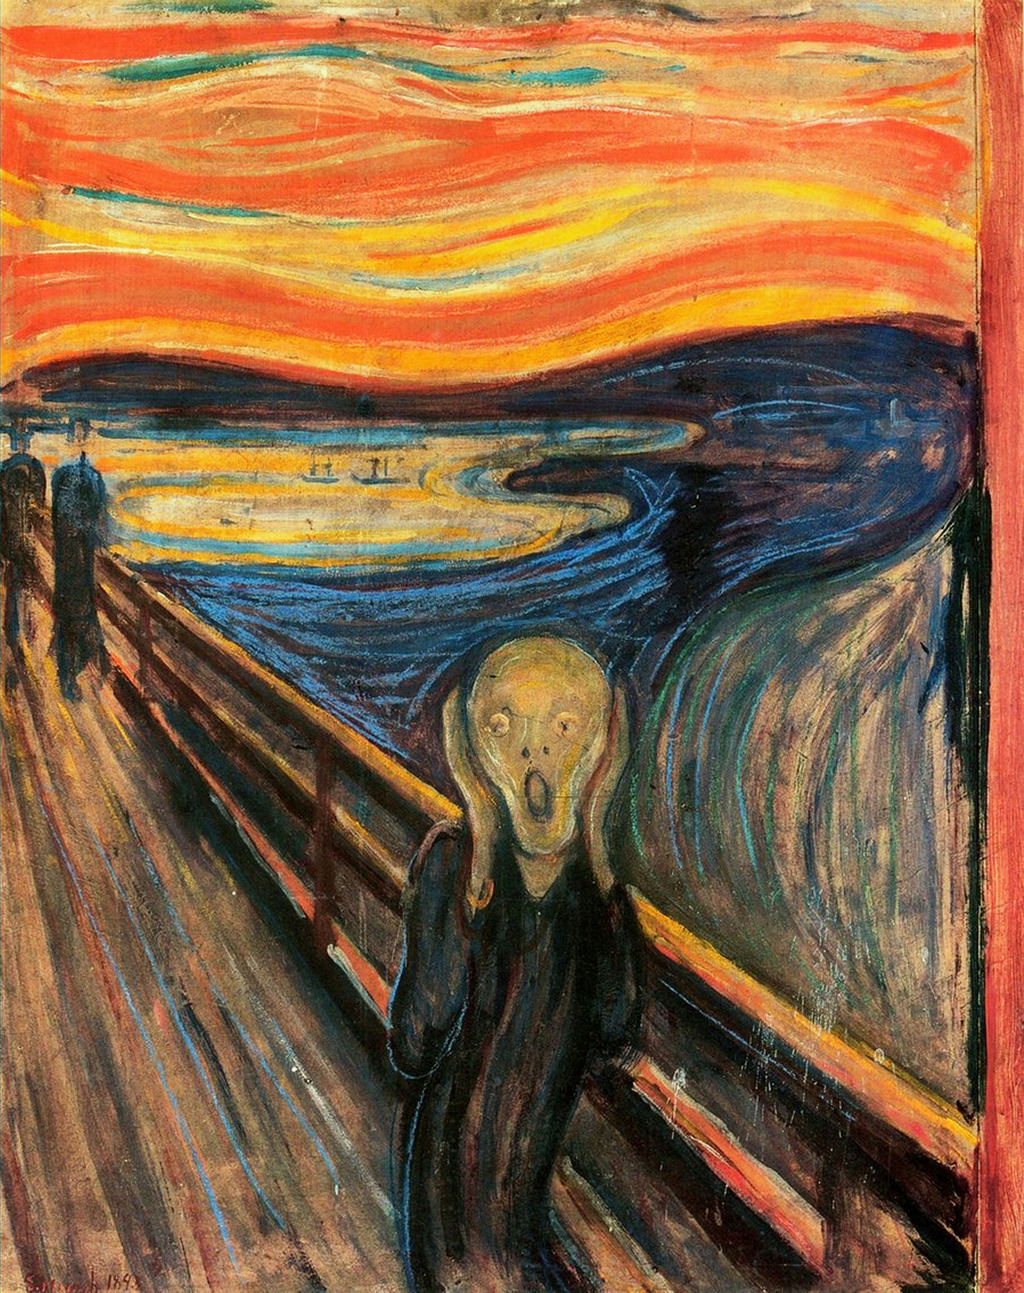 Edvard Munch, "The Scream," 1893